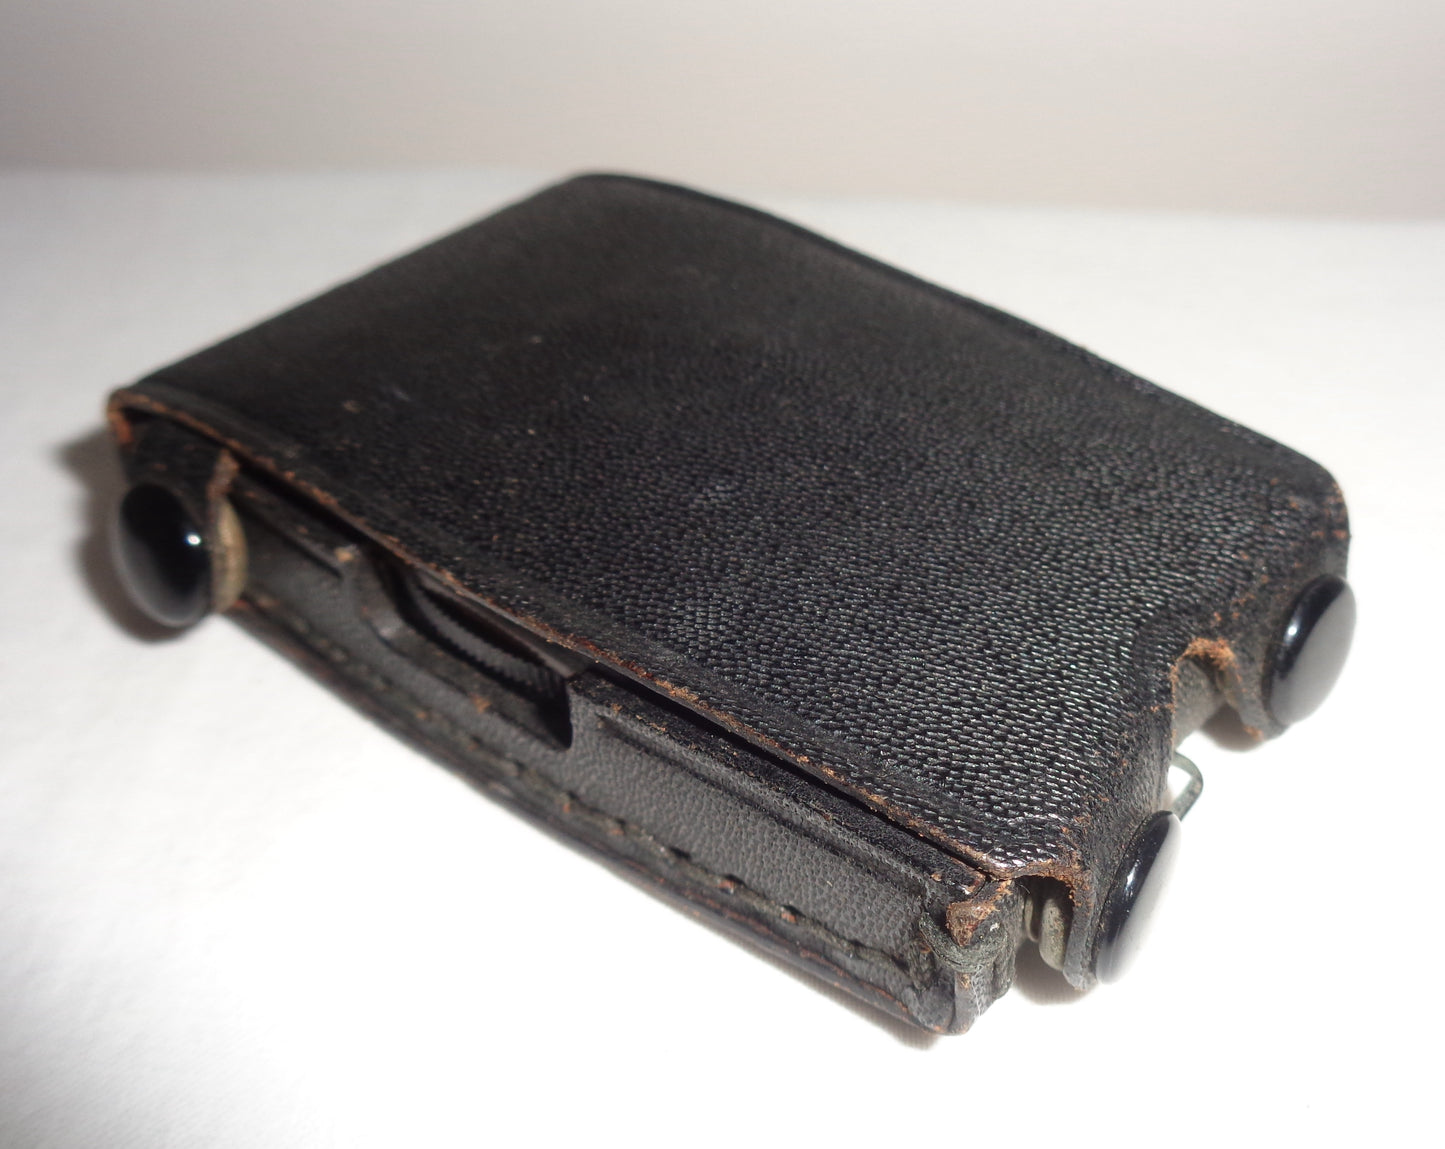 Hanimex PR45 Selenium Cell Light Exposure Meter In A Leather Case